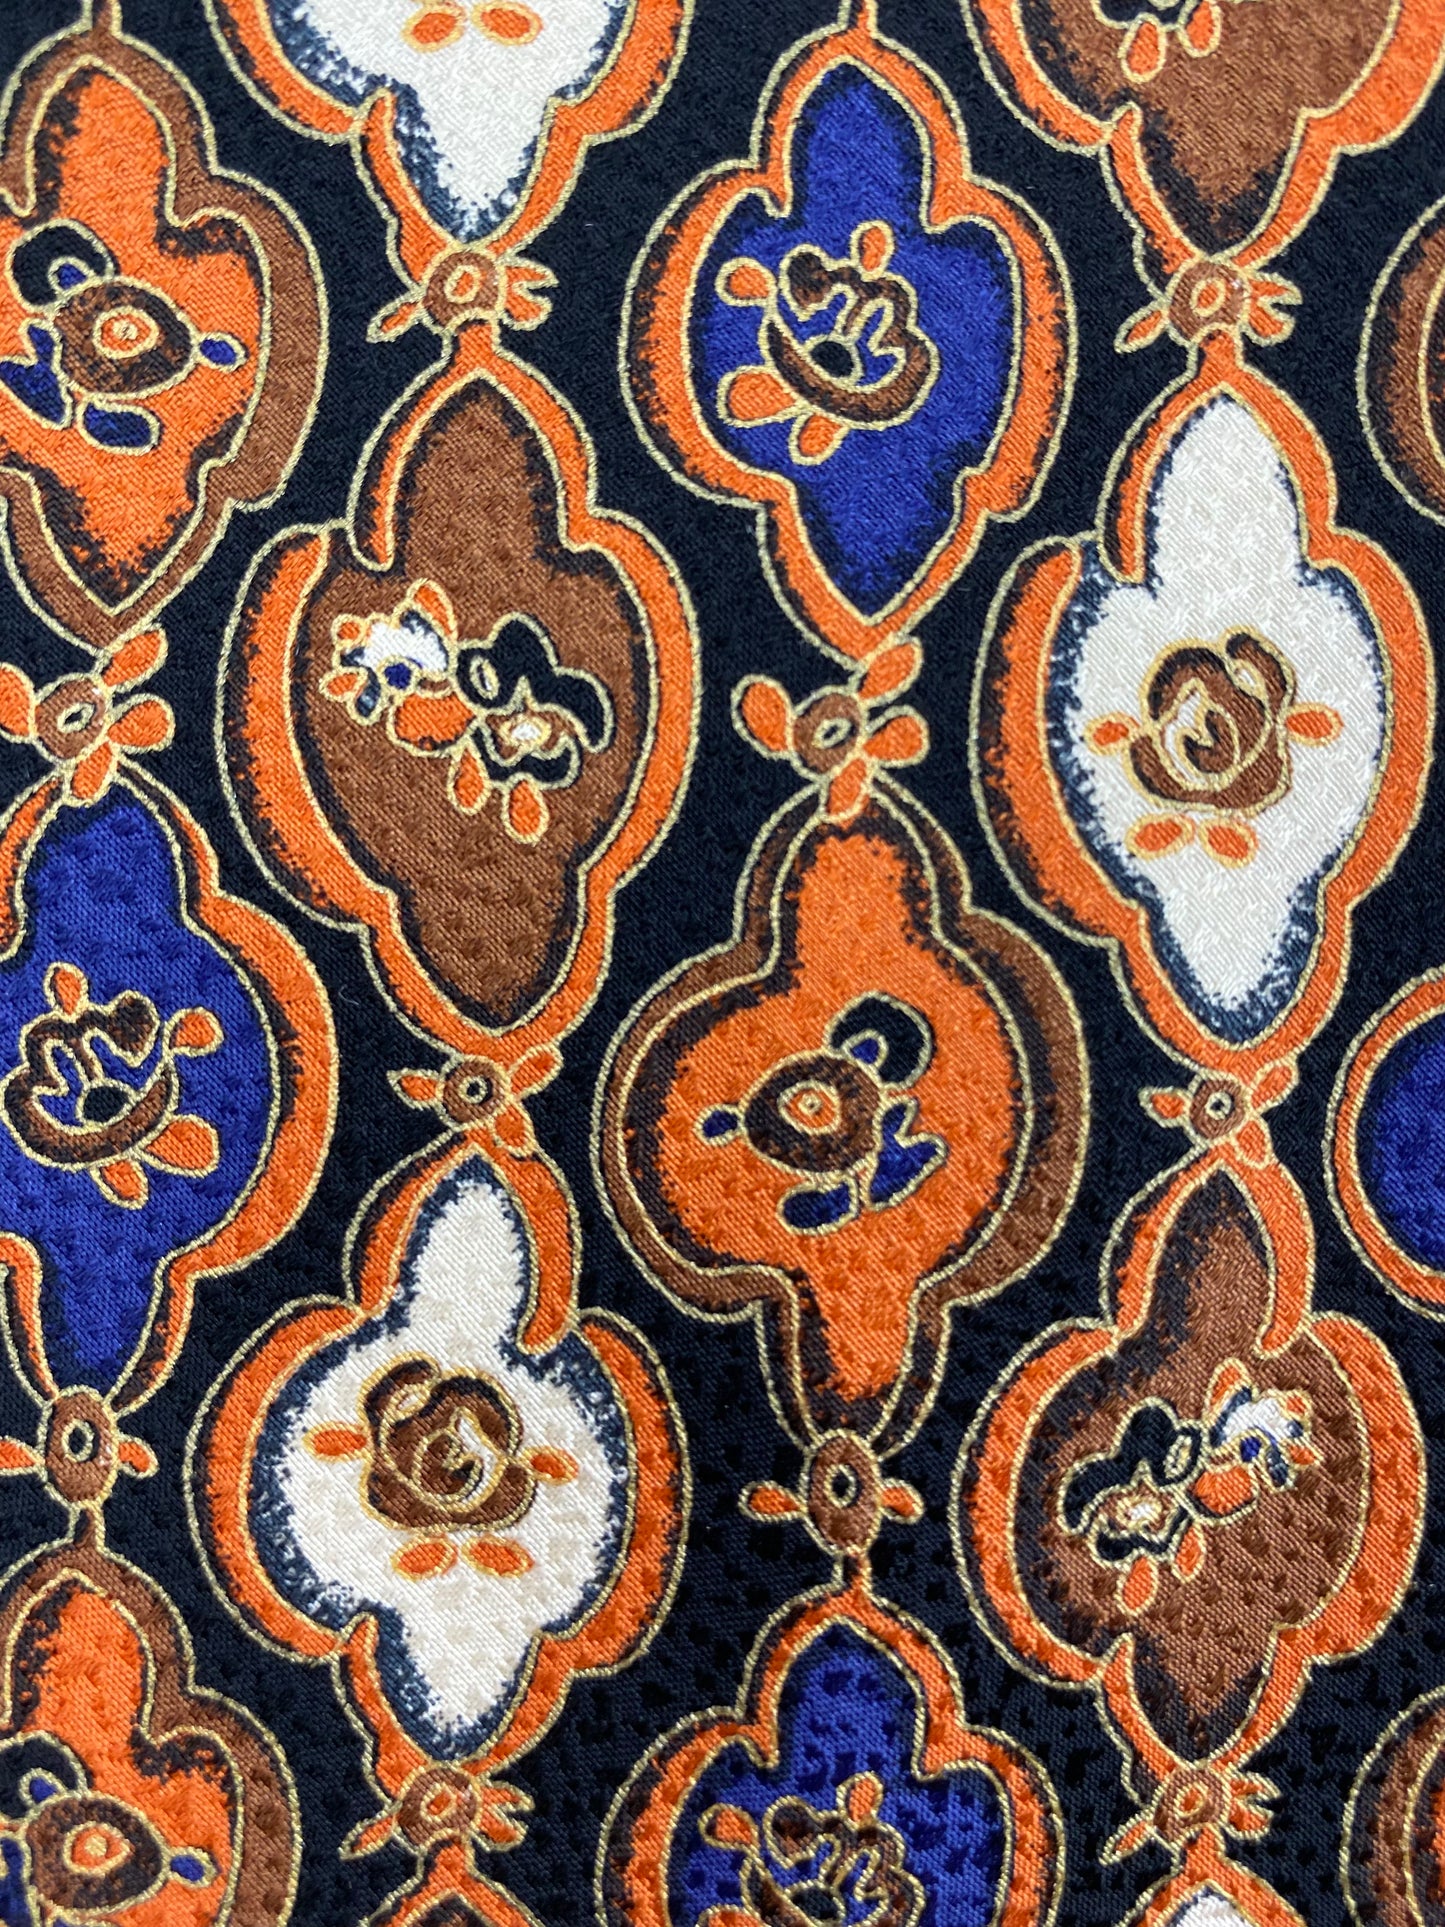 Close-up detail of: 90s Deadstock Silk Necktie, Men's Vintage Orange/ Purple/ Brown Abstract Pattern Tie, NOS